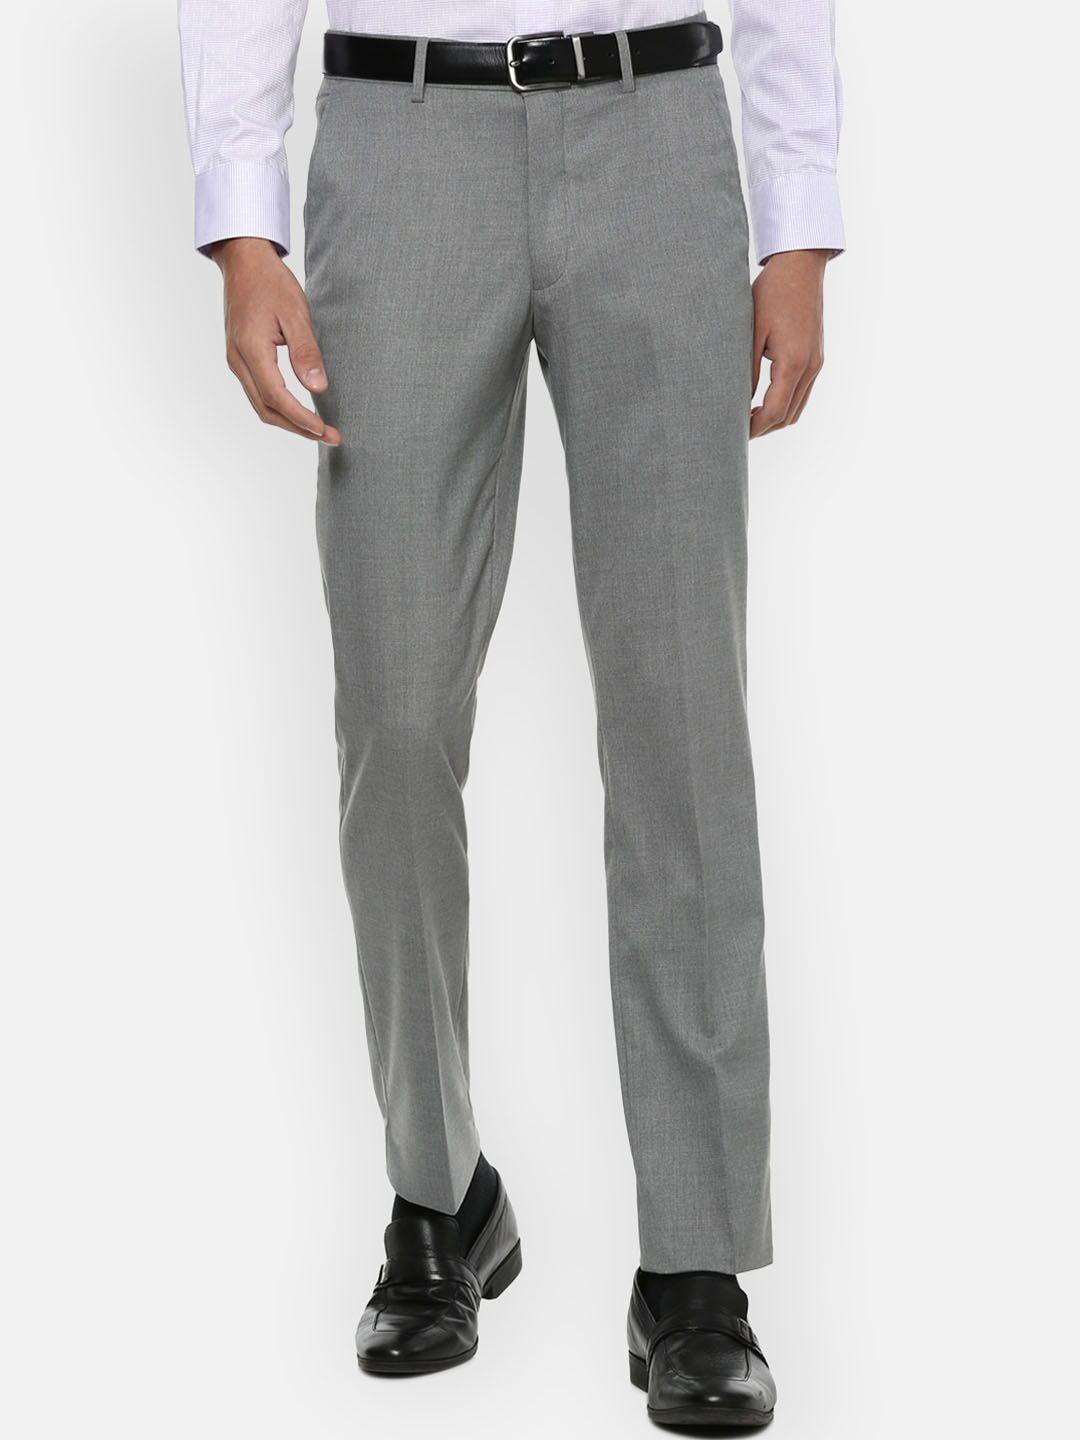 louis philippe men grey slim fit trousers